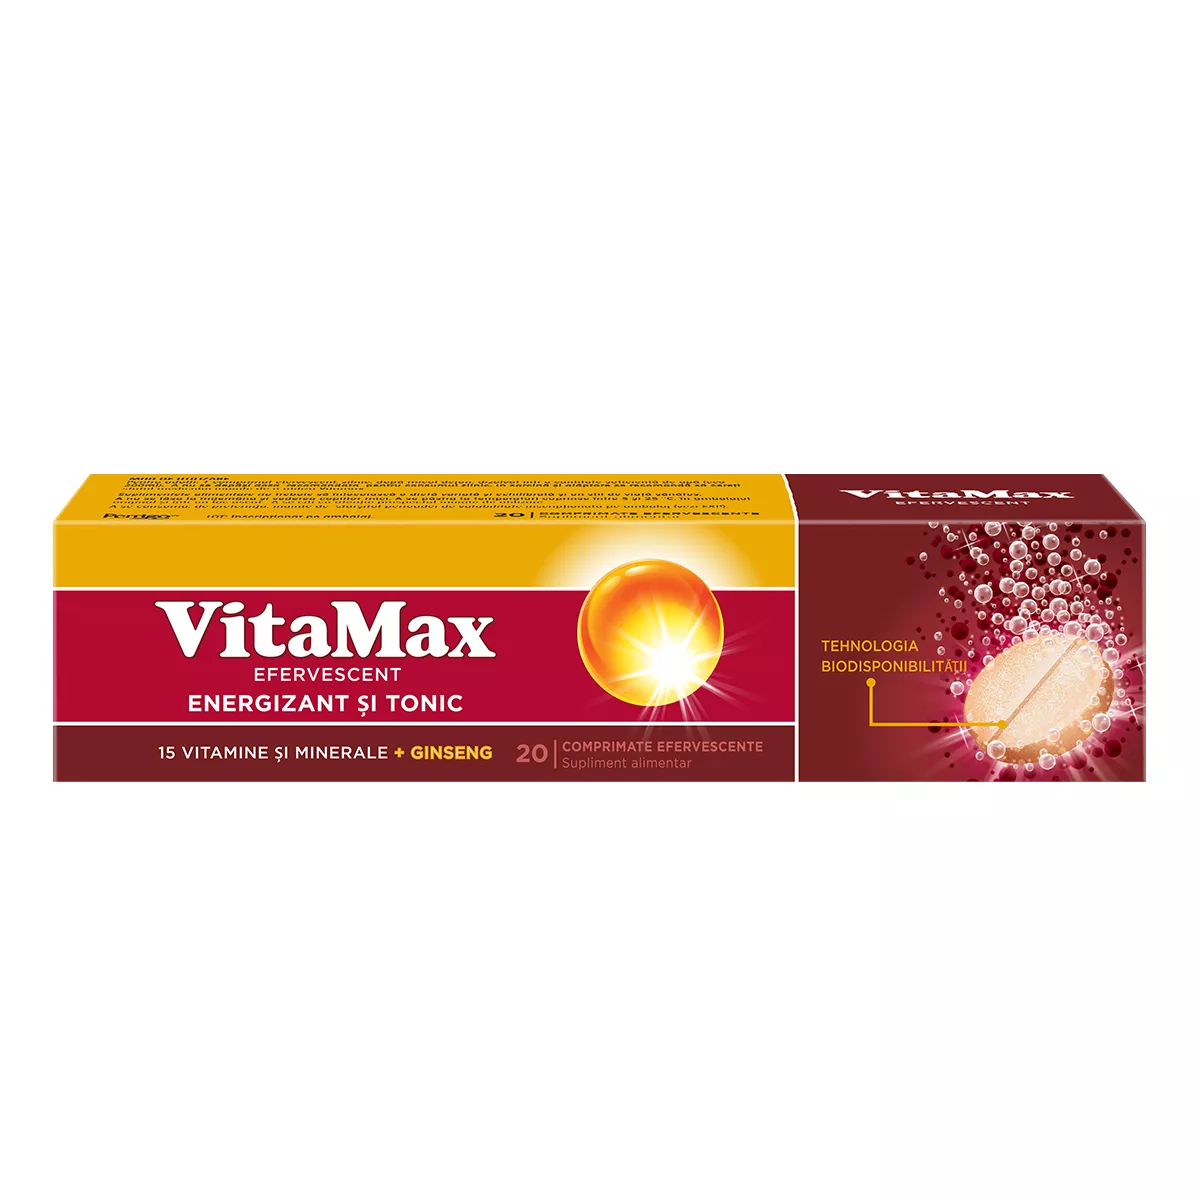 Vitamax Efervescent, 20 comprimate, Perrigo
, [],nordpharm.ro